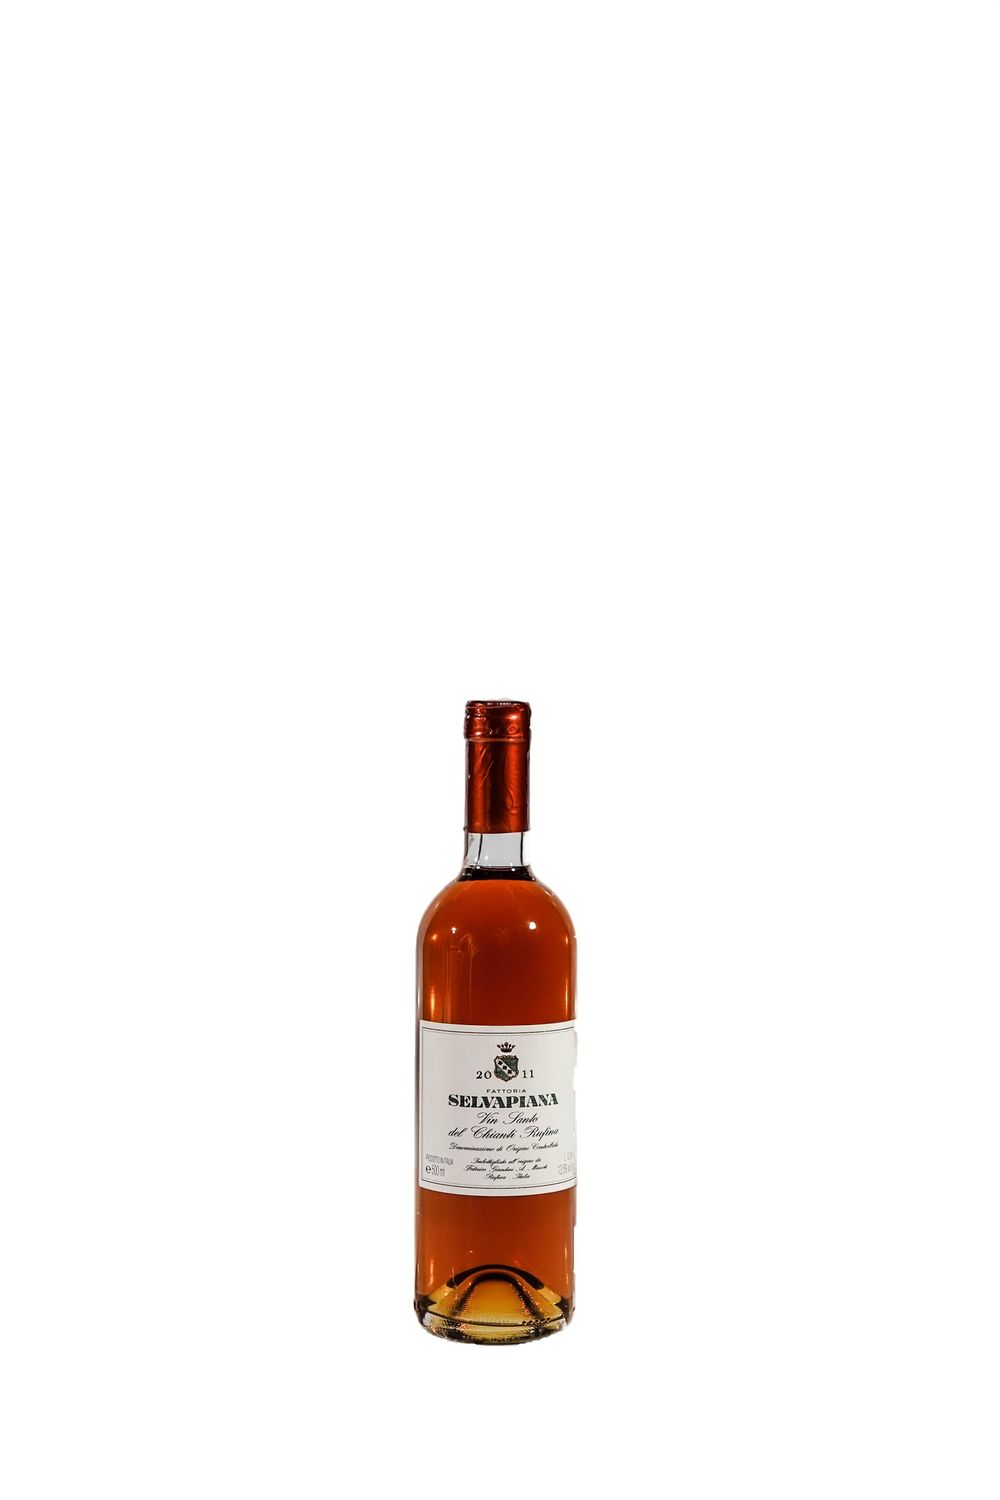 Bottle of Selvapiana Vin Santo del Chianti Rufina from search results